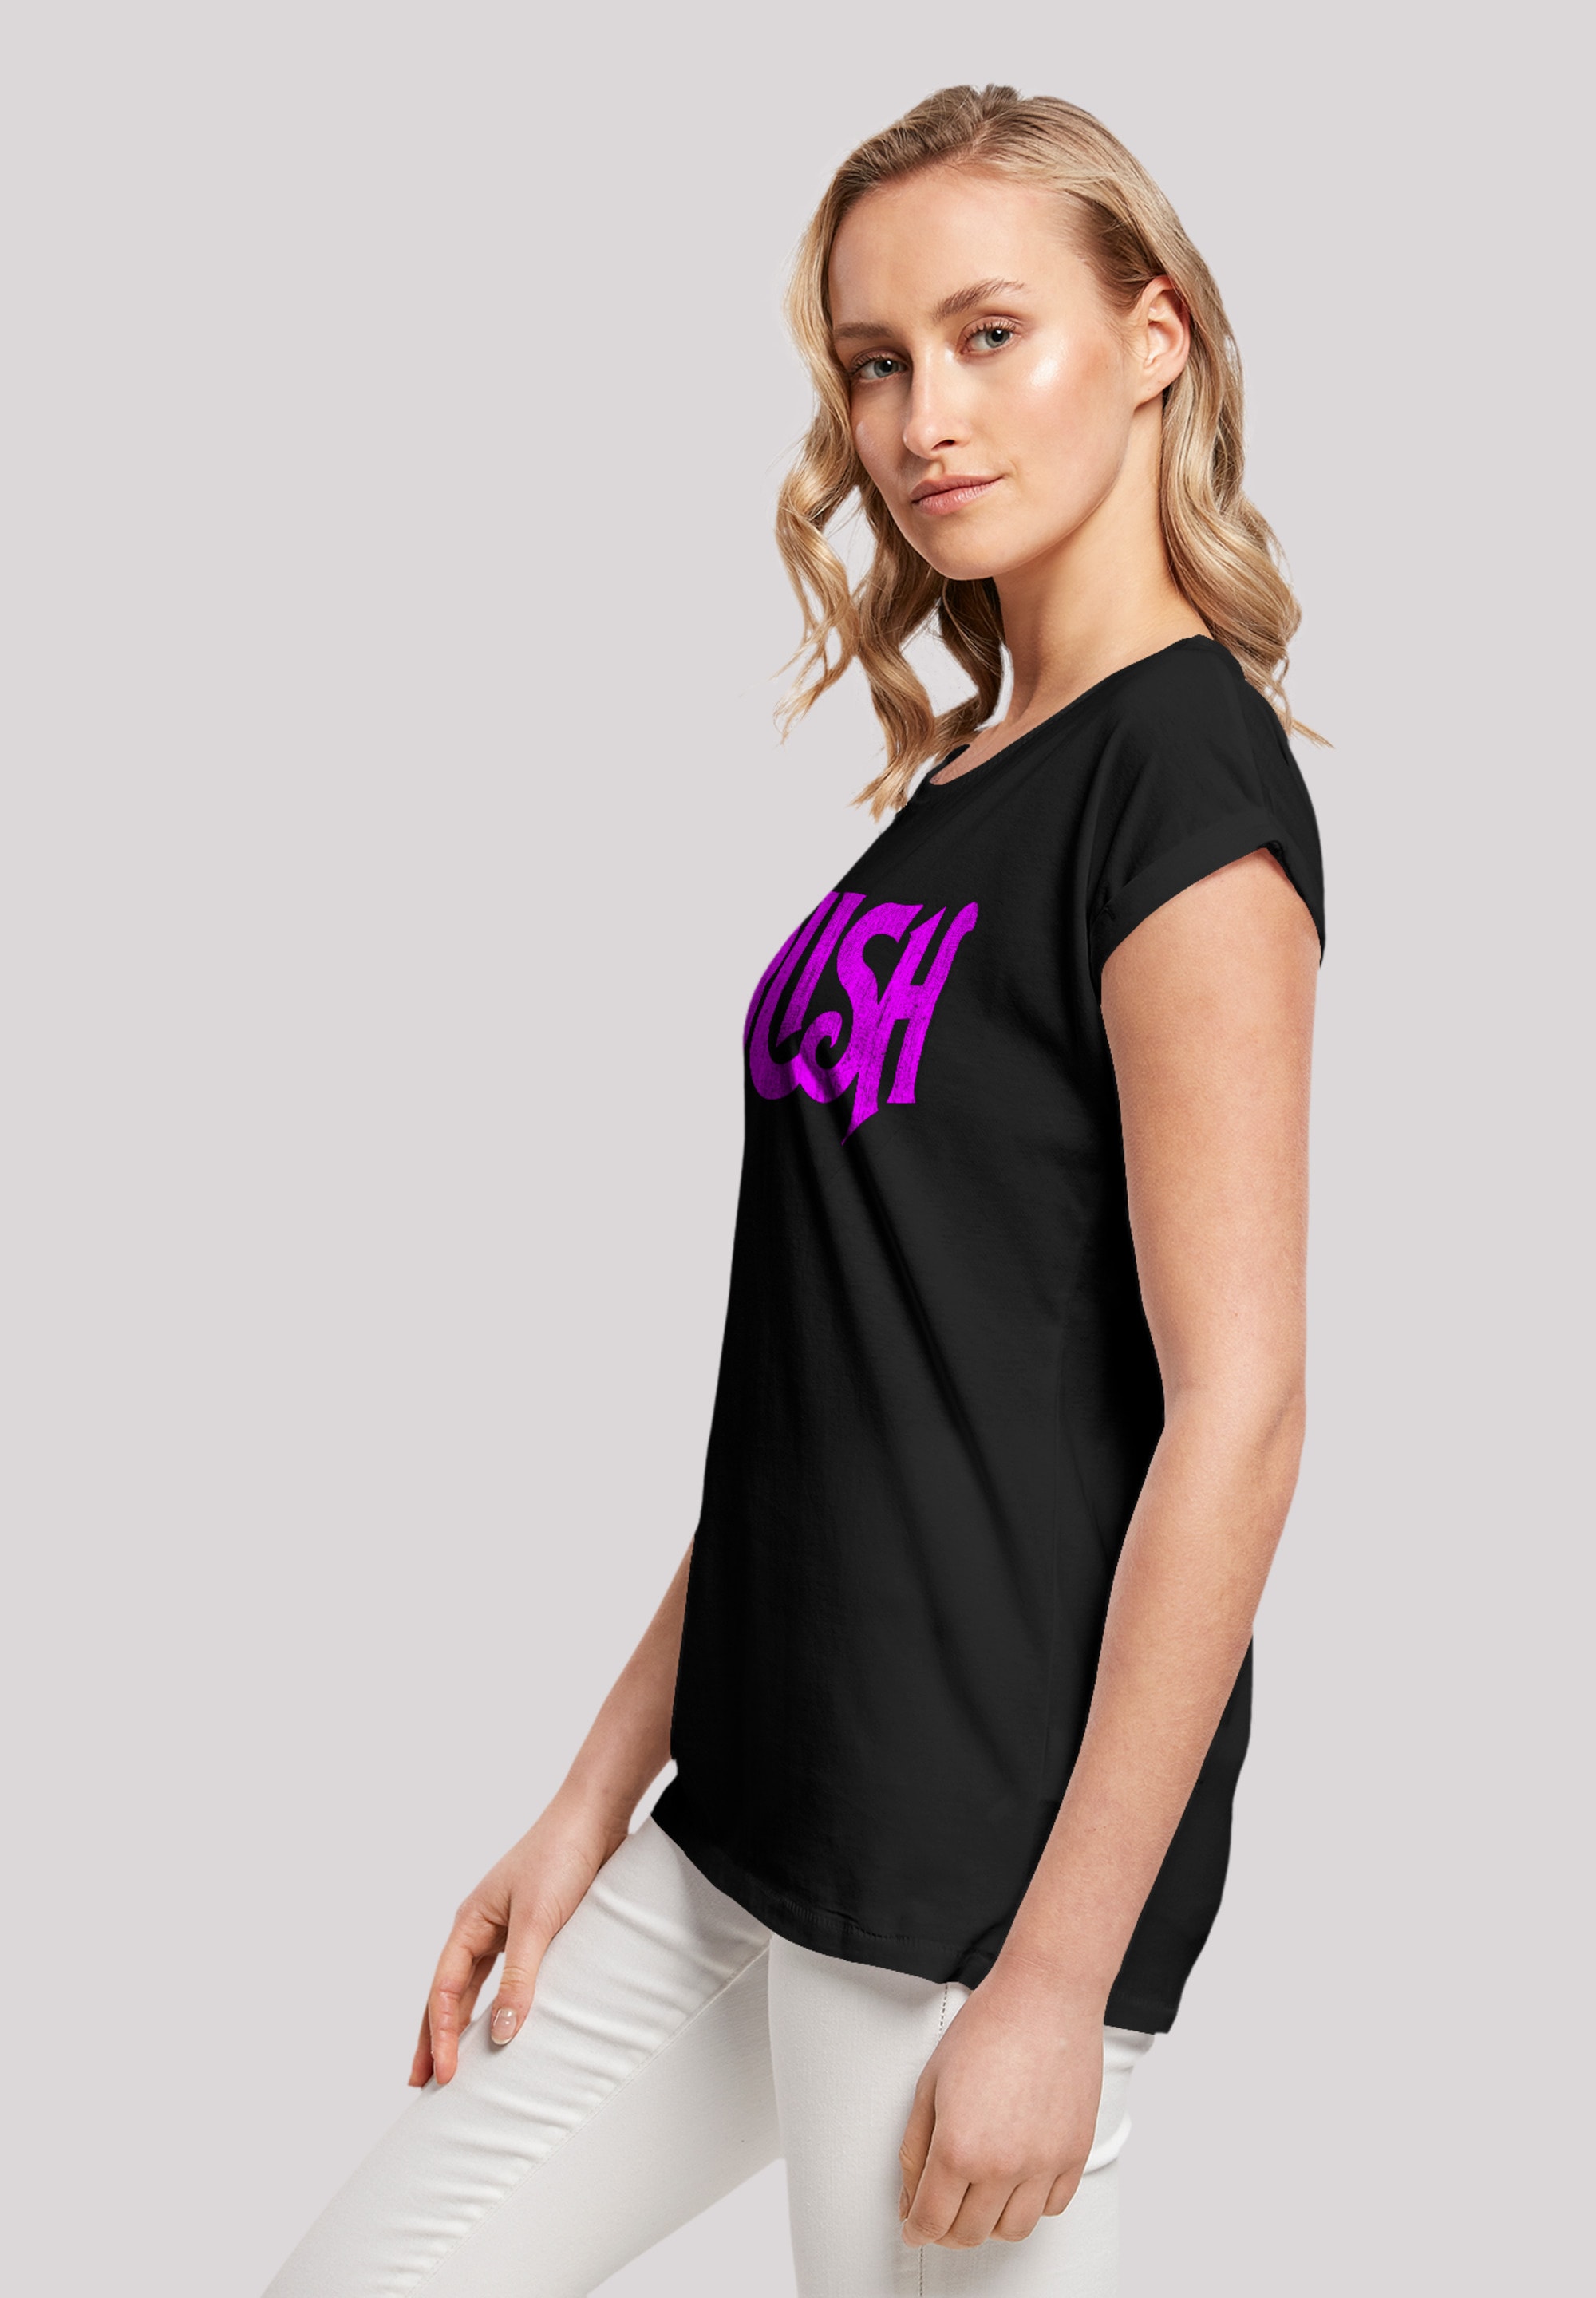 Band Premium »Rush | F4NT4STIC I\'m T-Shirt walking Logo«, Qualität Rock Distressed